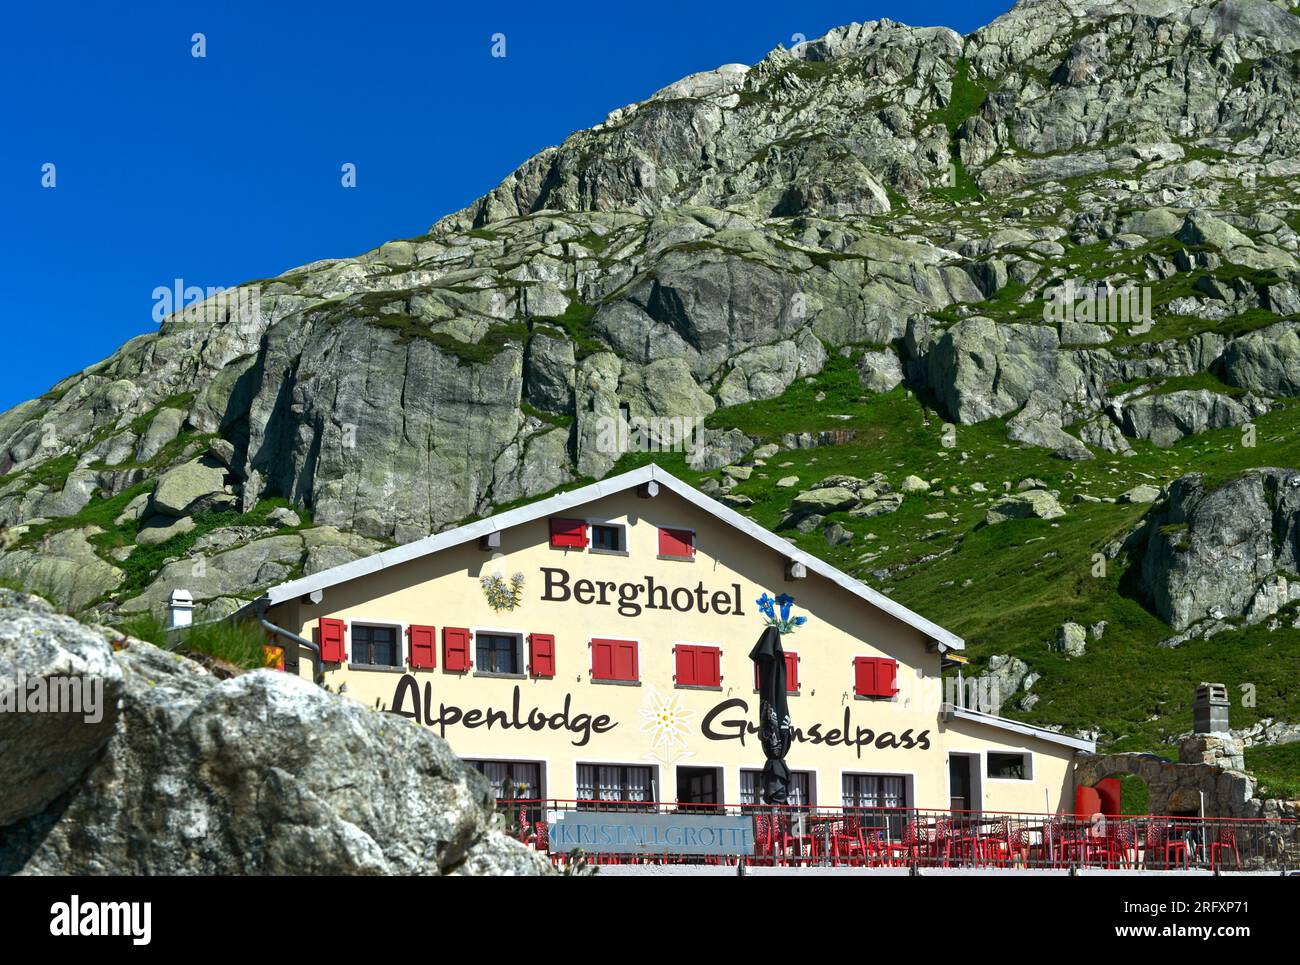 Mountain lodge and hotel Grimselpass, Oberwald, Valais, Switzerland Stock Photo